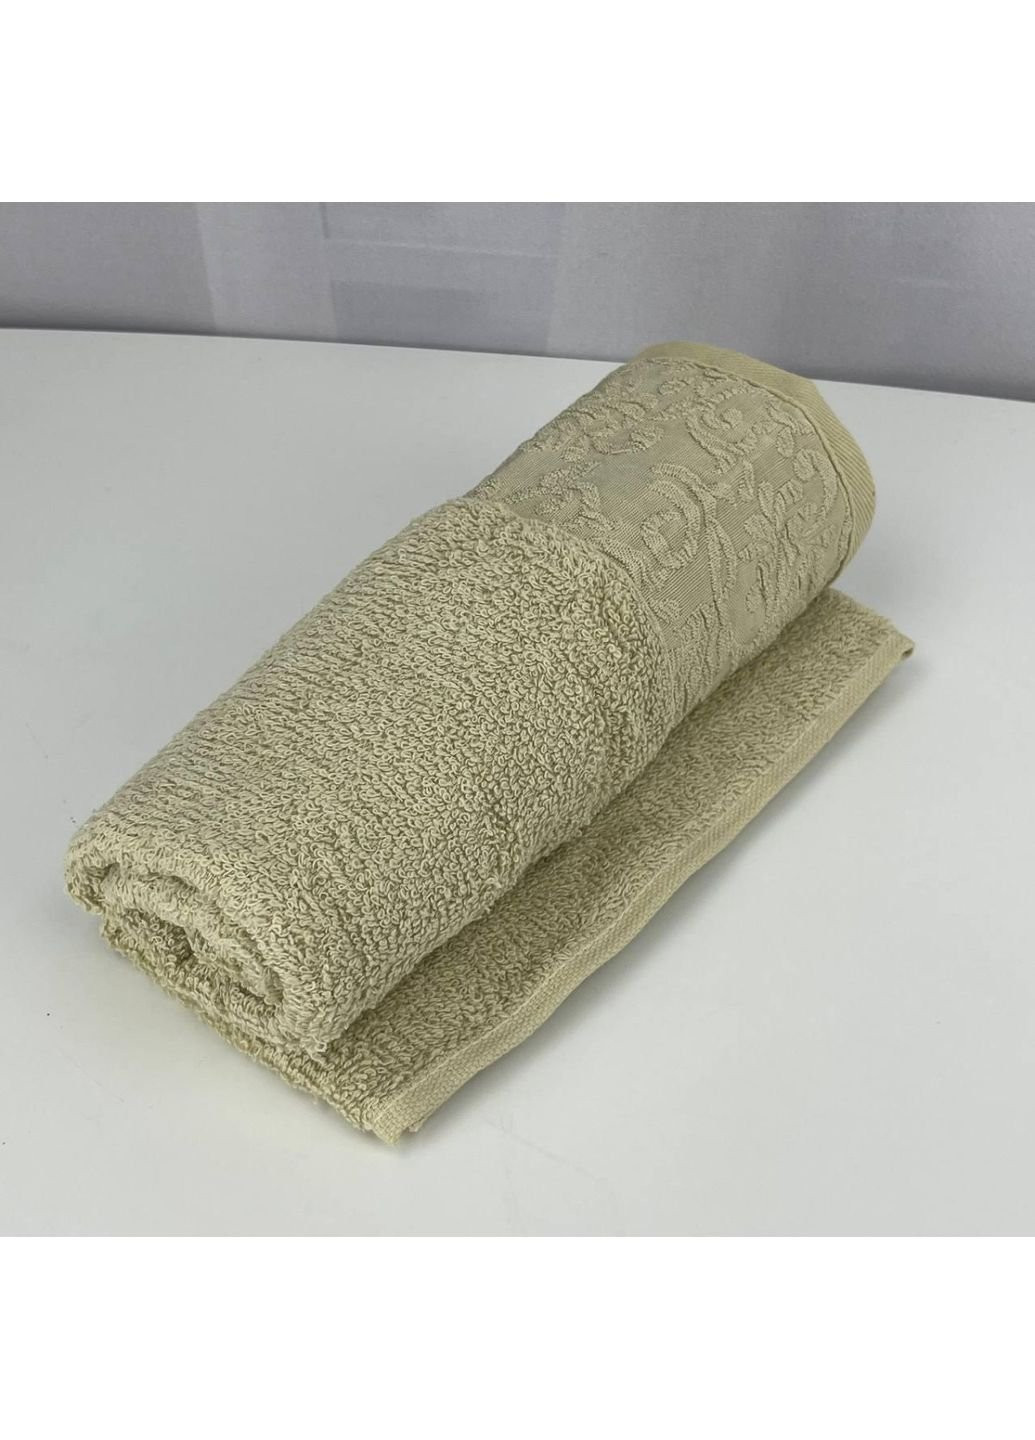 No Brand полотенце для лица махровое febo vip cotton botan турция 6401 бежевое 50х90 см комбинированный производство - Украина